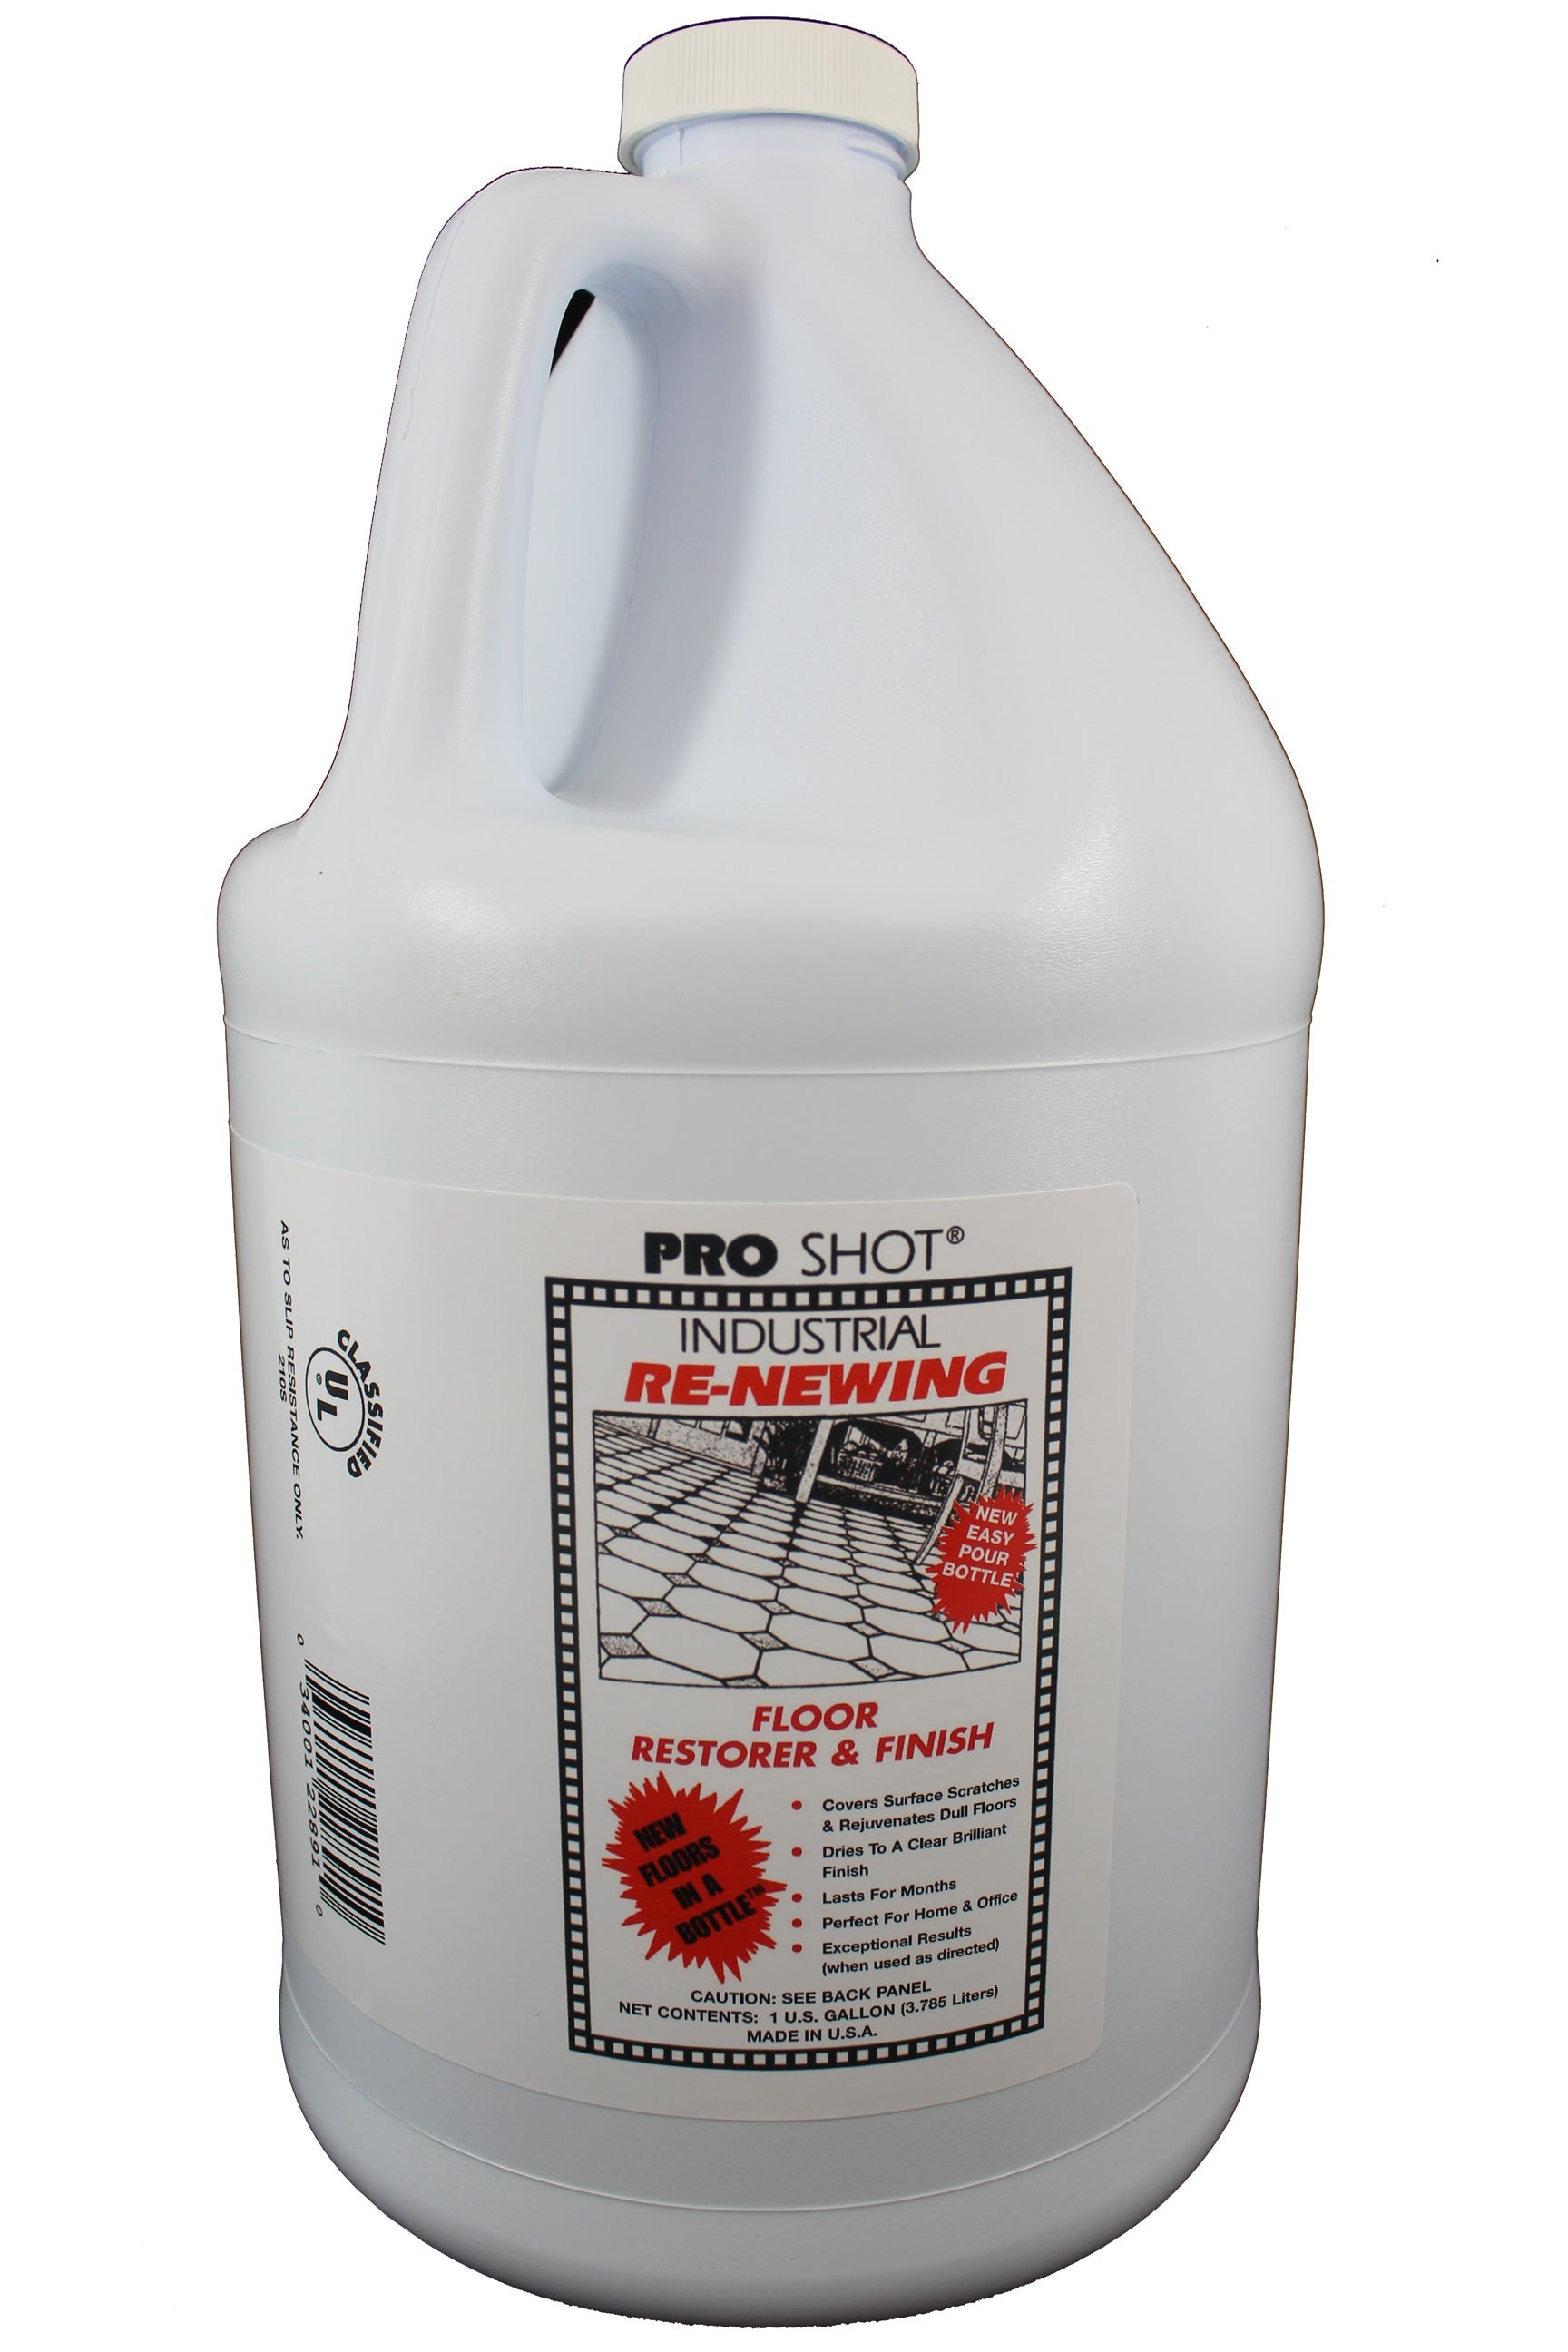 PRO SHOT® Industrial Re-Newing Floor Restorer & Finish one gallon image